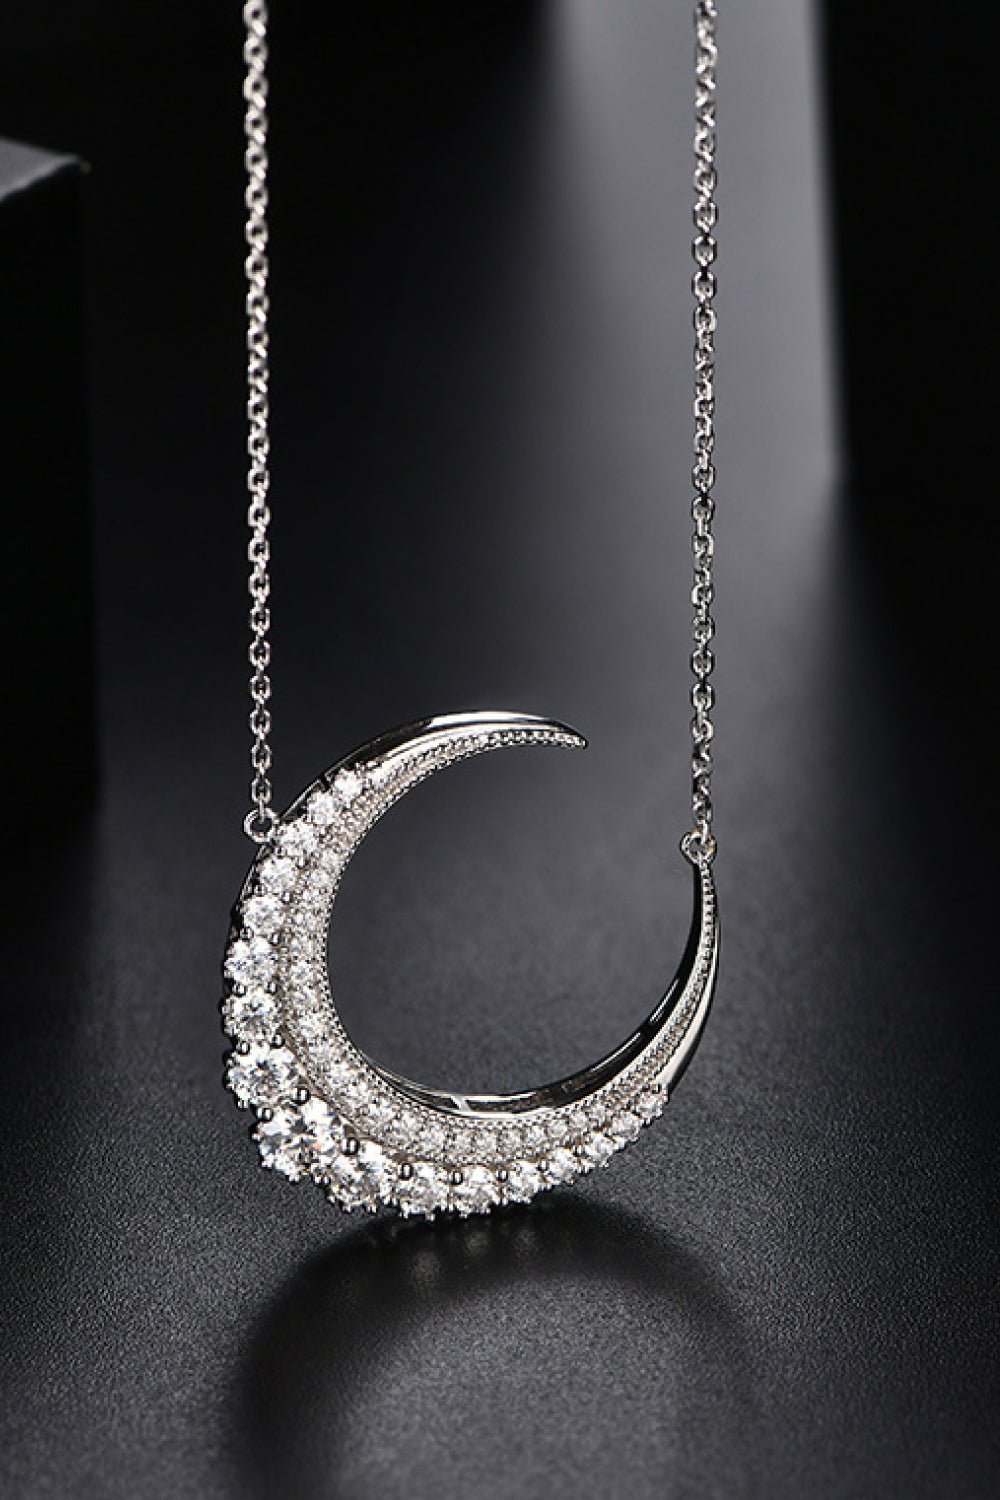 1.8 Carat Moissanite Crescent Moon Shape Pendant Necklace - OMG! Rose